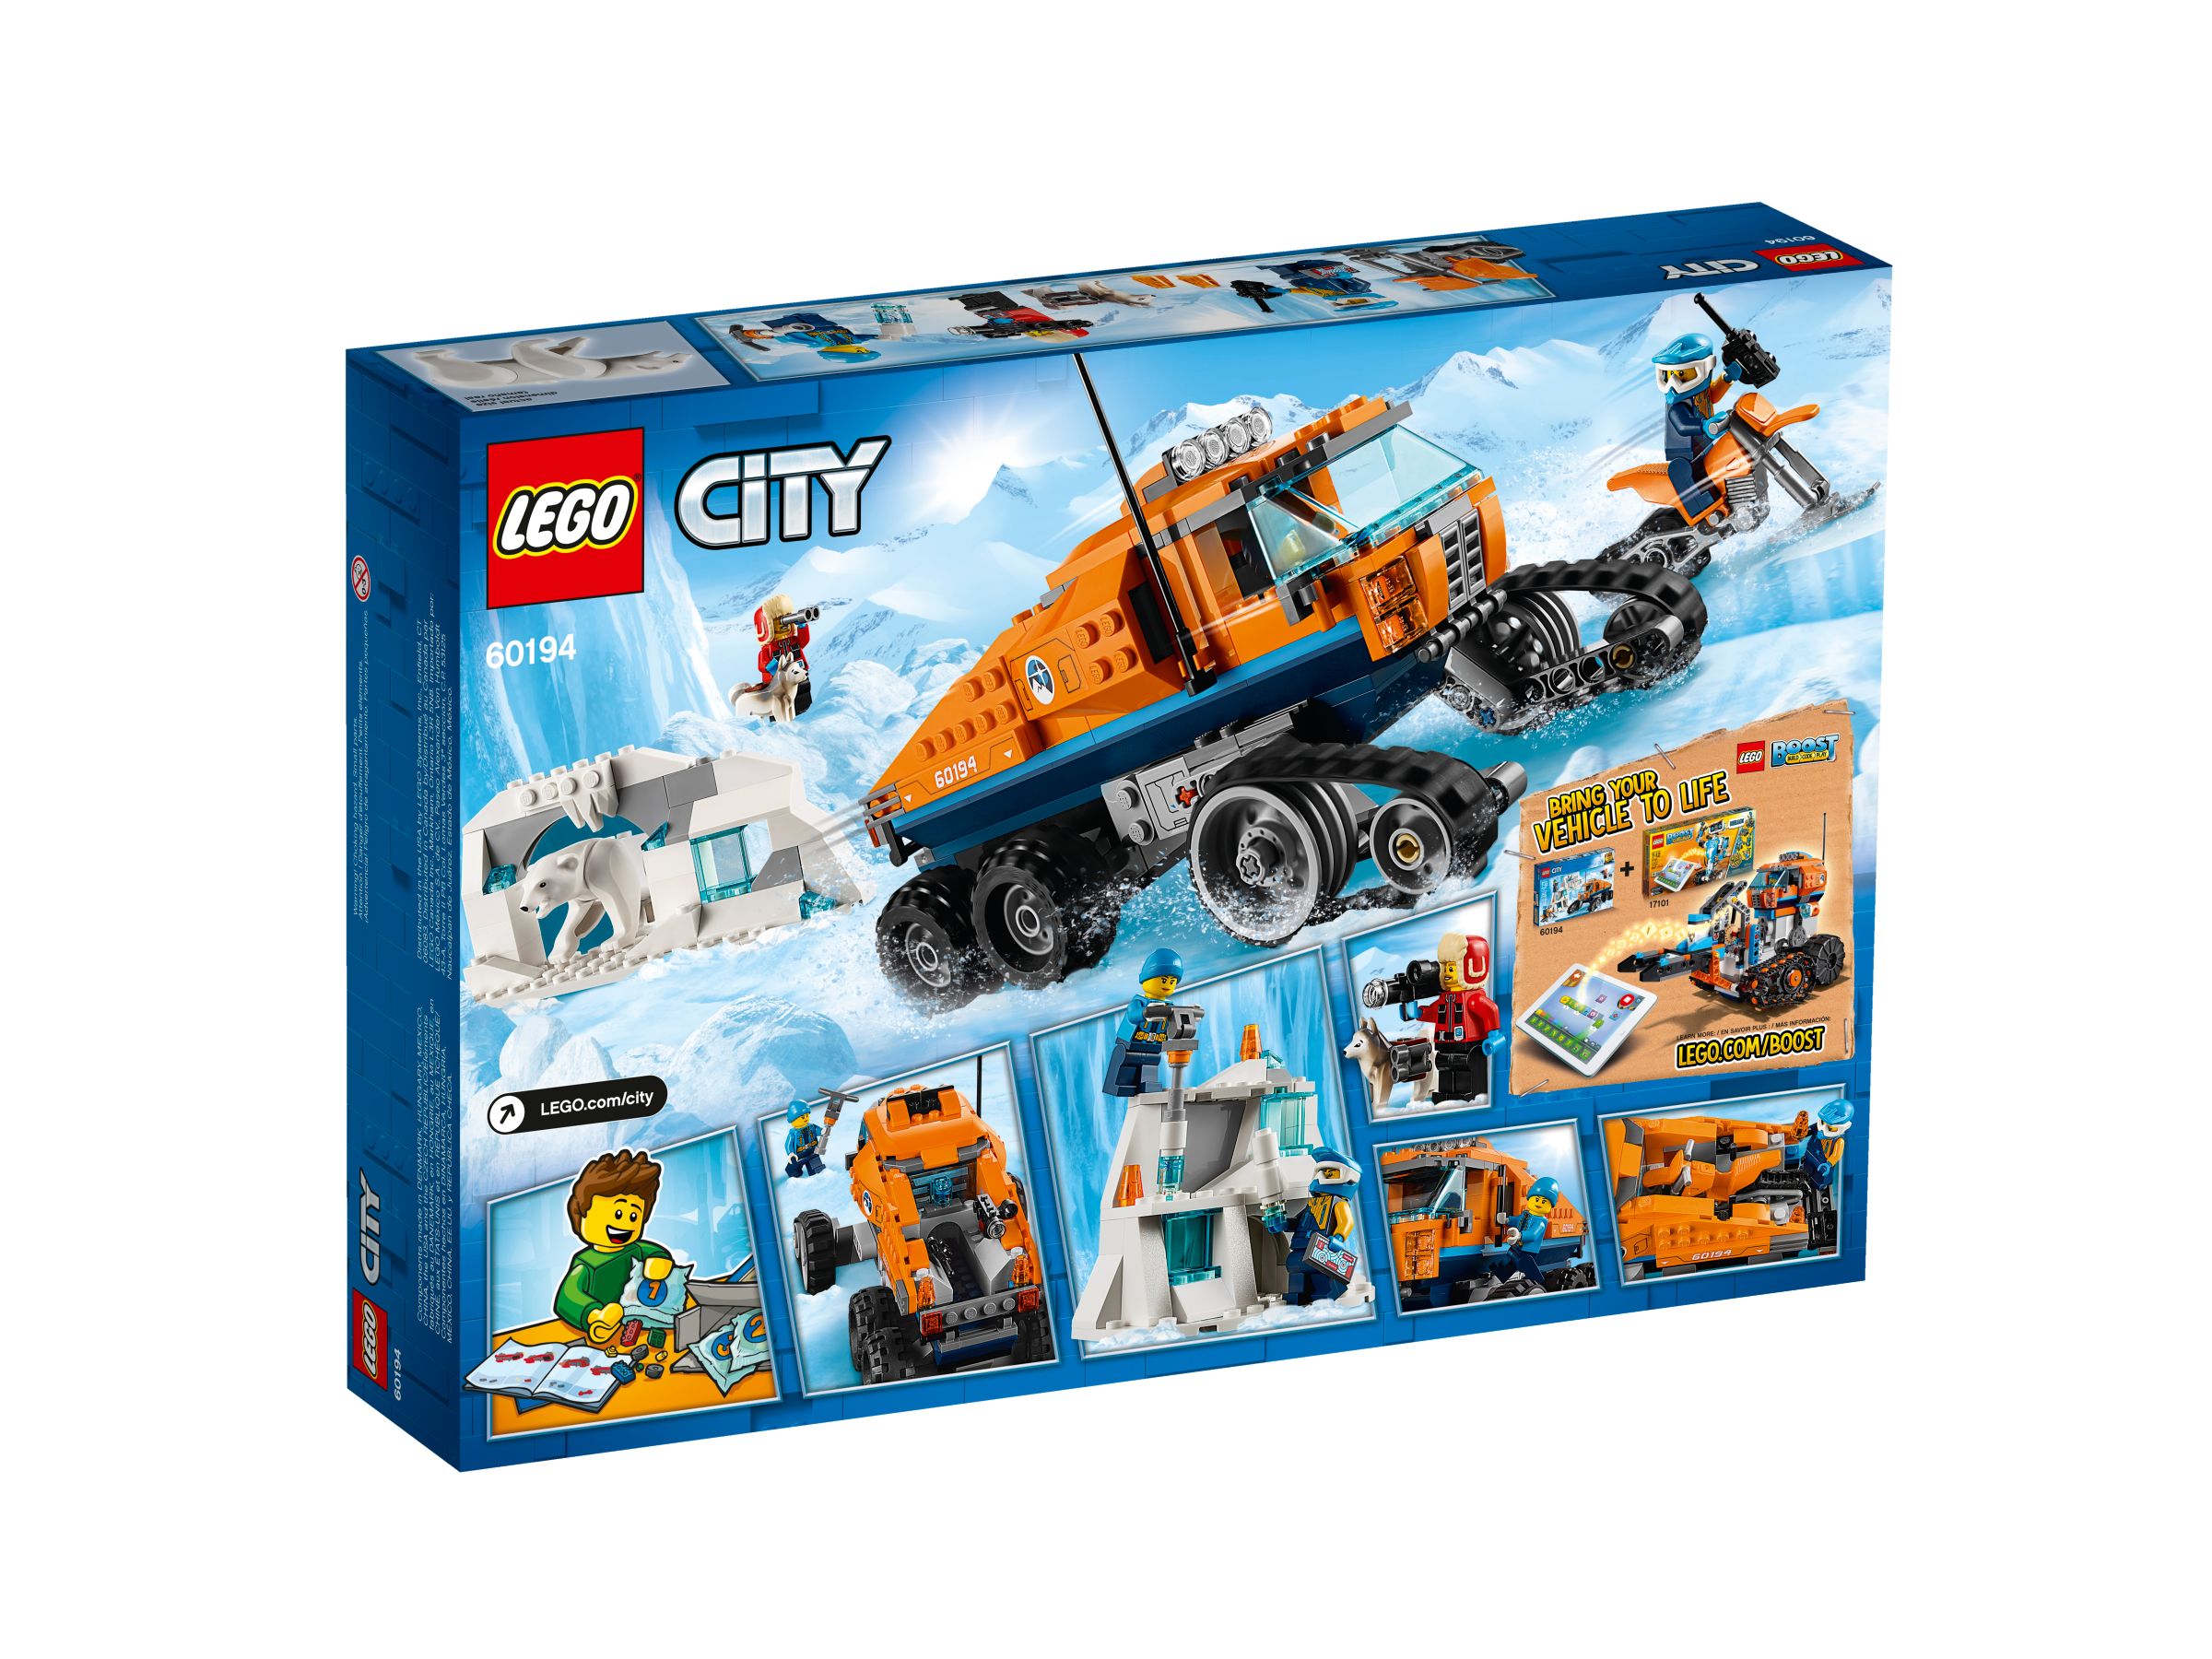 LEGO City 60194 Arktis-Erkundungstruck LEGO_60194_alt4.jpg